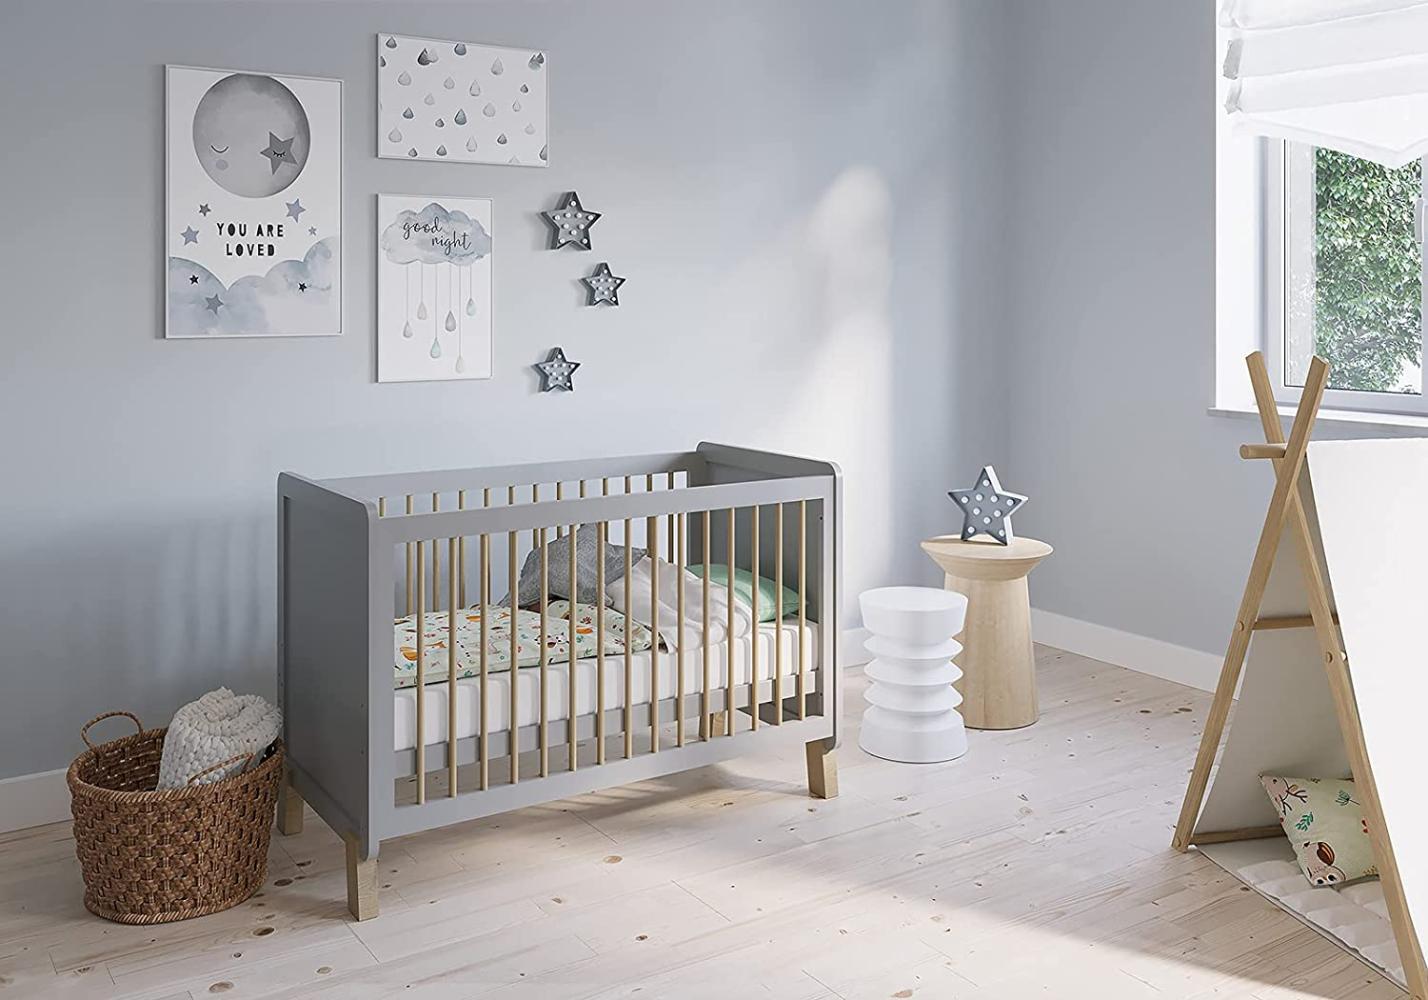 FabiMax 'Nachteule' Kinderbett, 60 x 120 cm, grau/natur, Kiefer massiv, 3-fach höhenverstellbar, umbaubar Bild 1